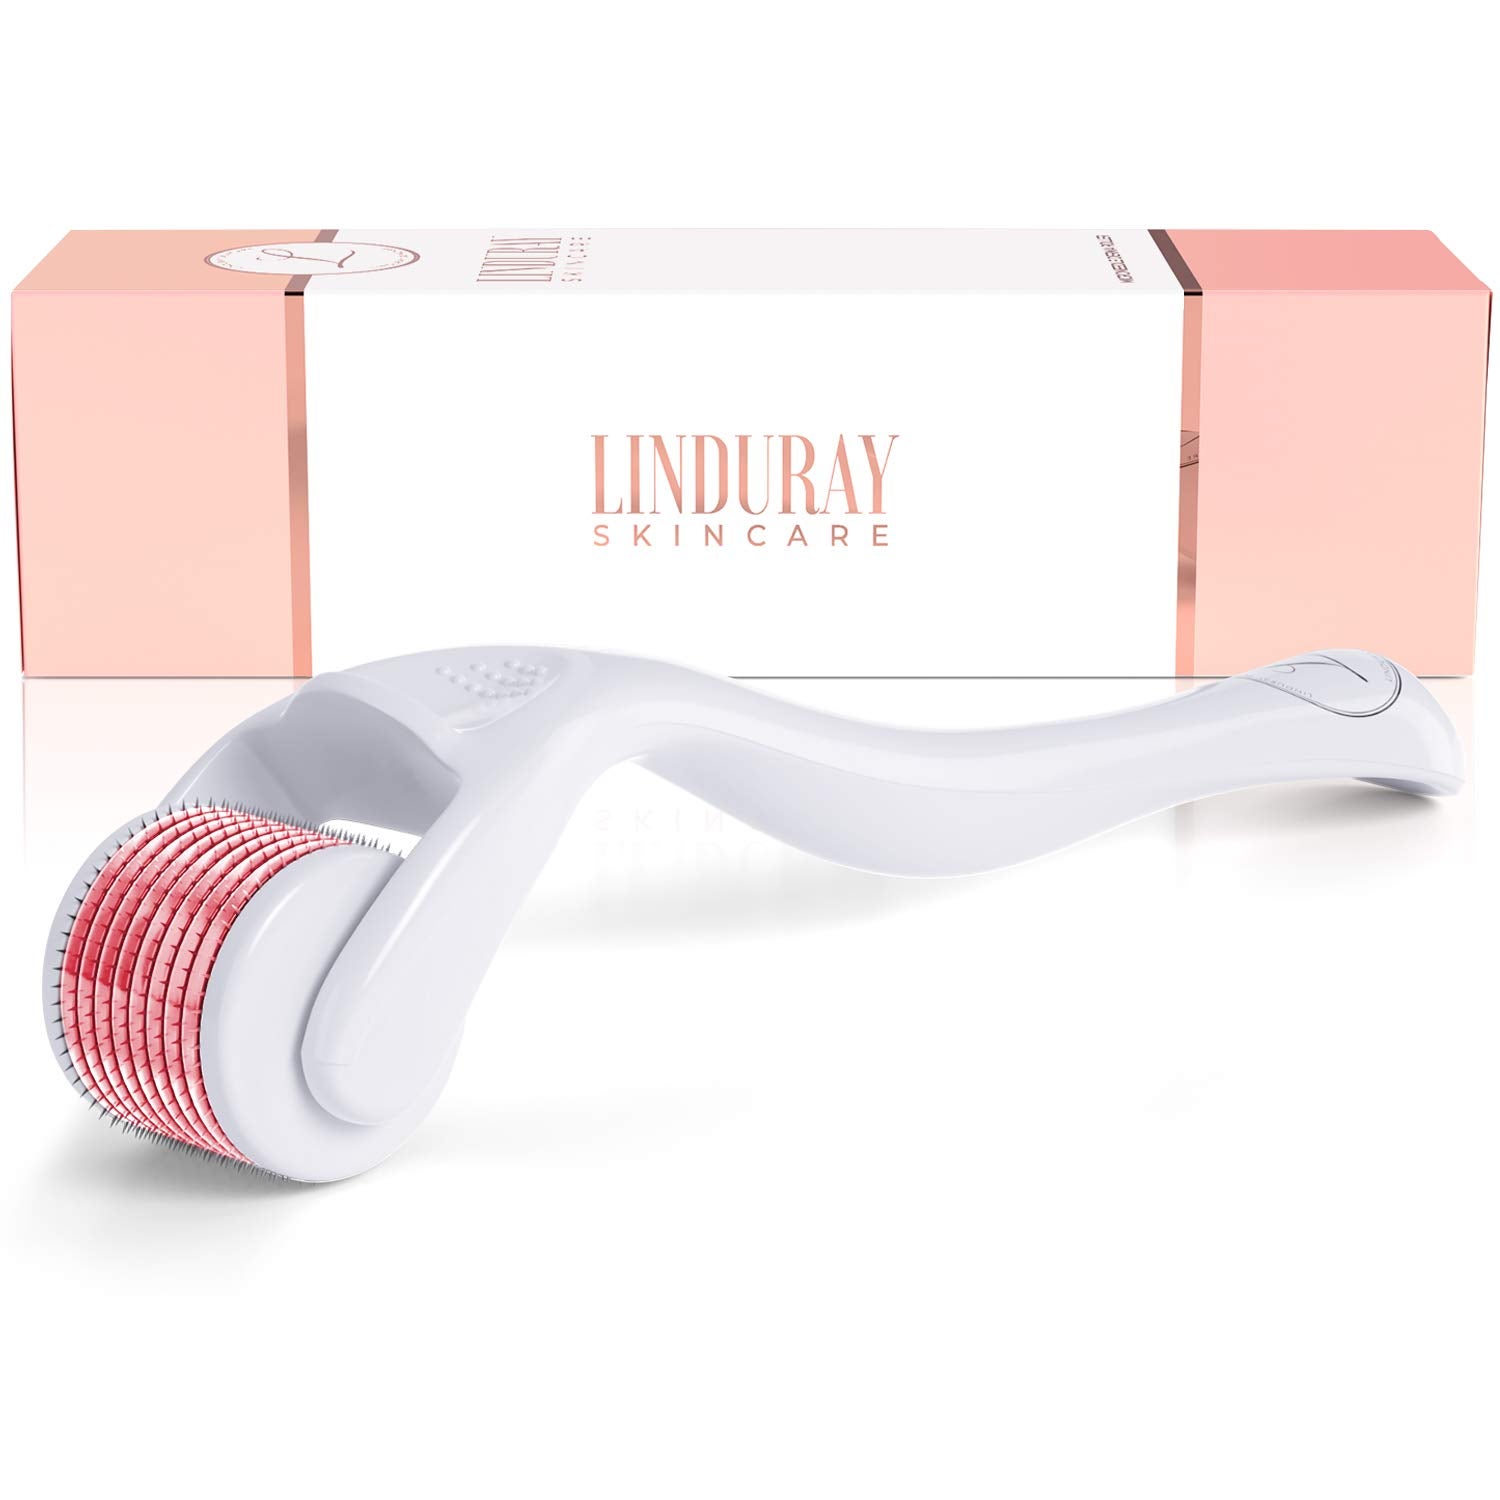 Linduray Skincare Derma Roller Microneedling Kit for Face 0.25mm - Microneedle Face Roller Microdermabrasion Tool 540 Titanium Micro Needles for Facial, Beard & Hair Growth